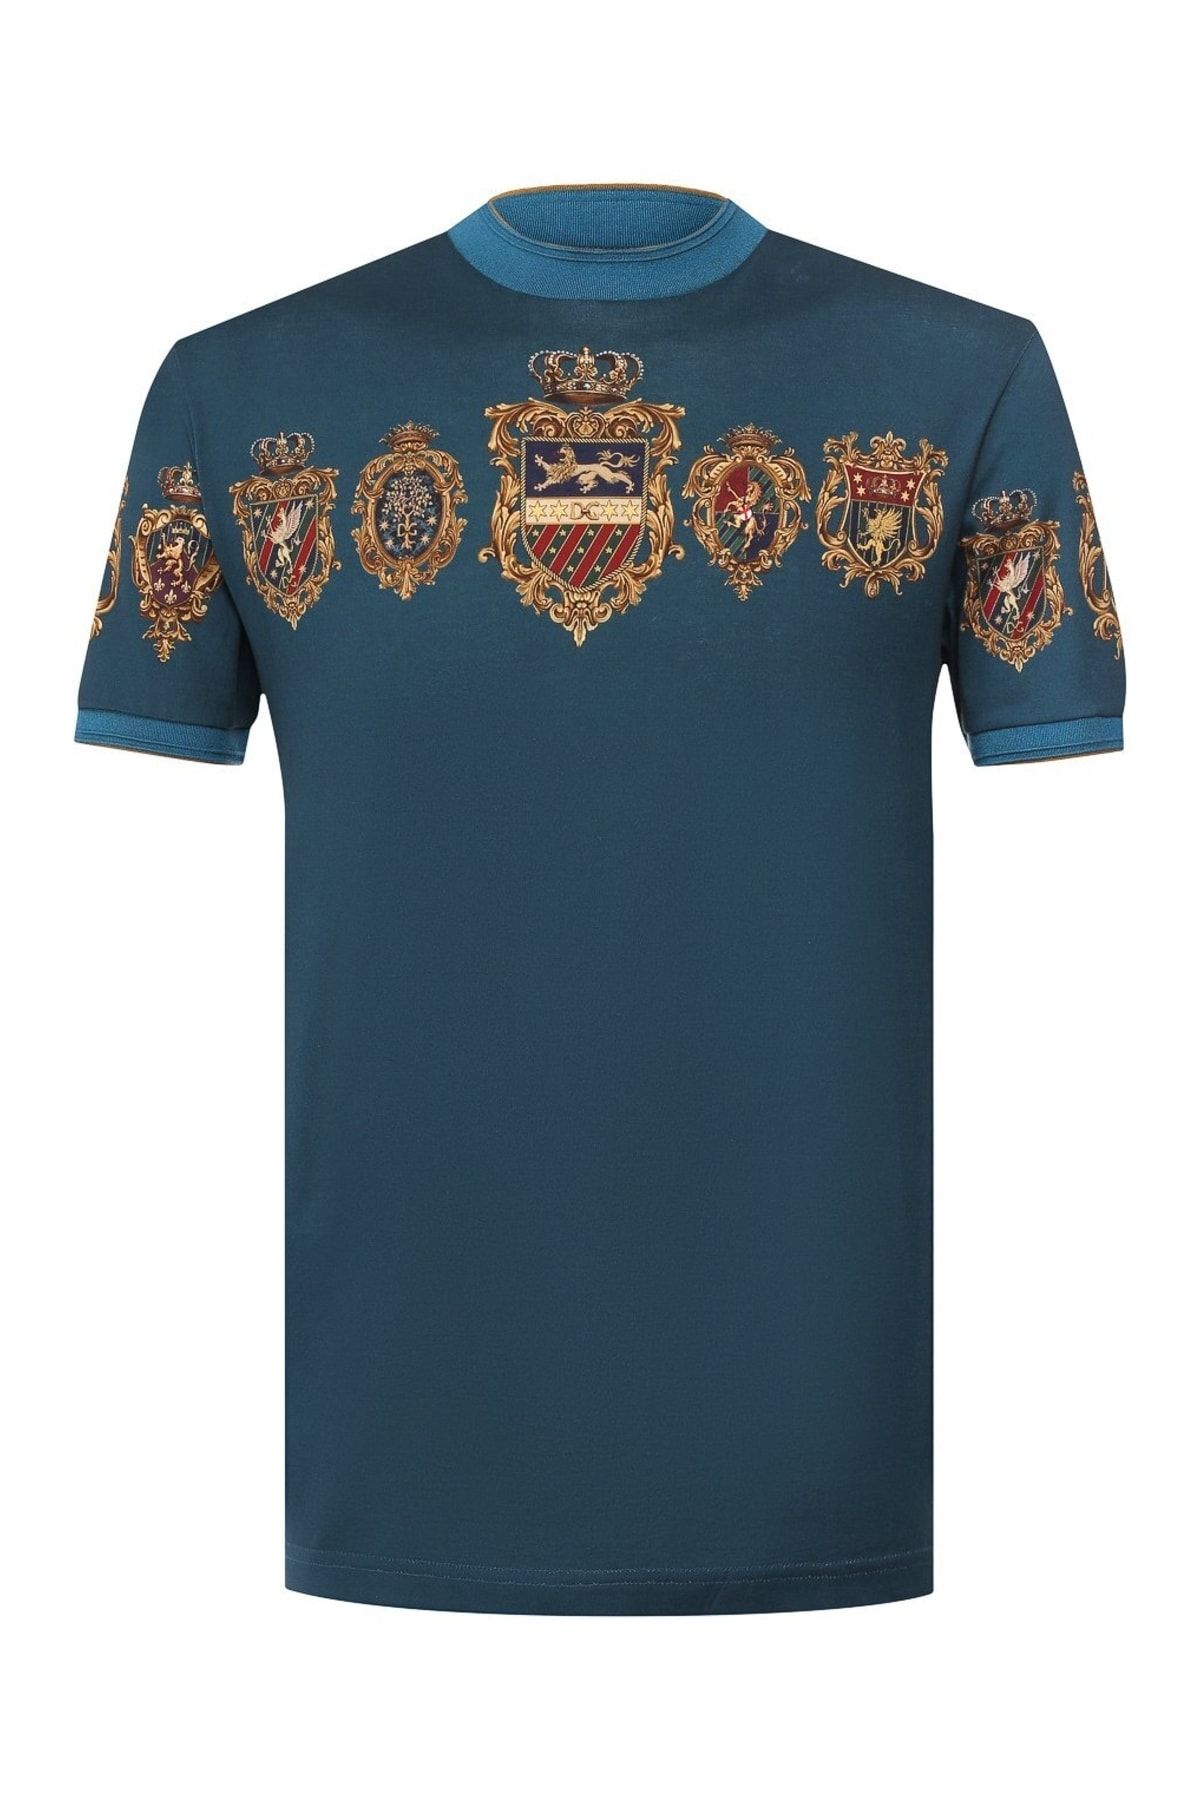 Dolce&Gabbana Crown Graphic Print T_shirt G8kl2thh768